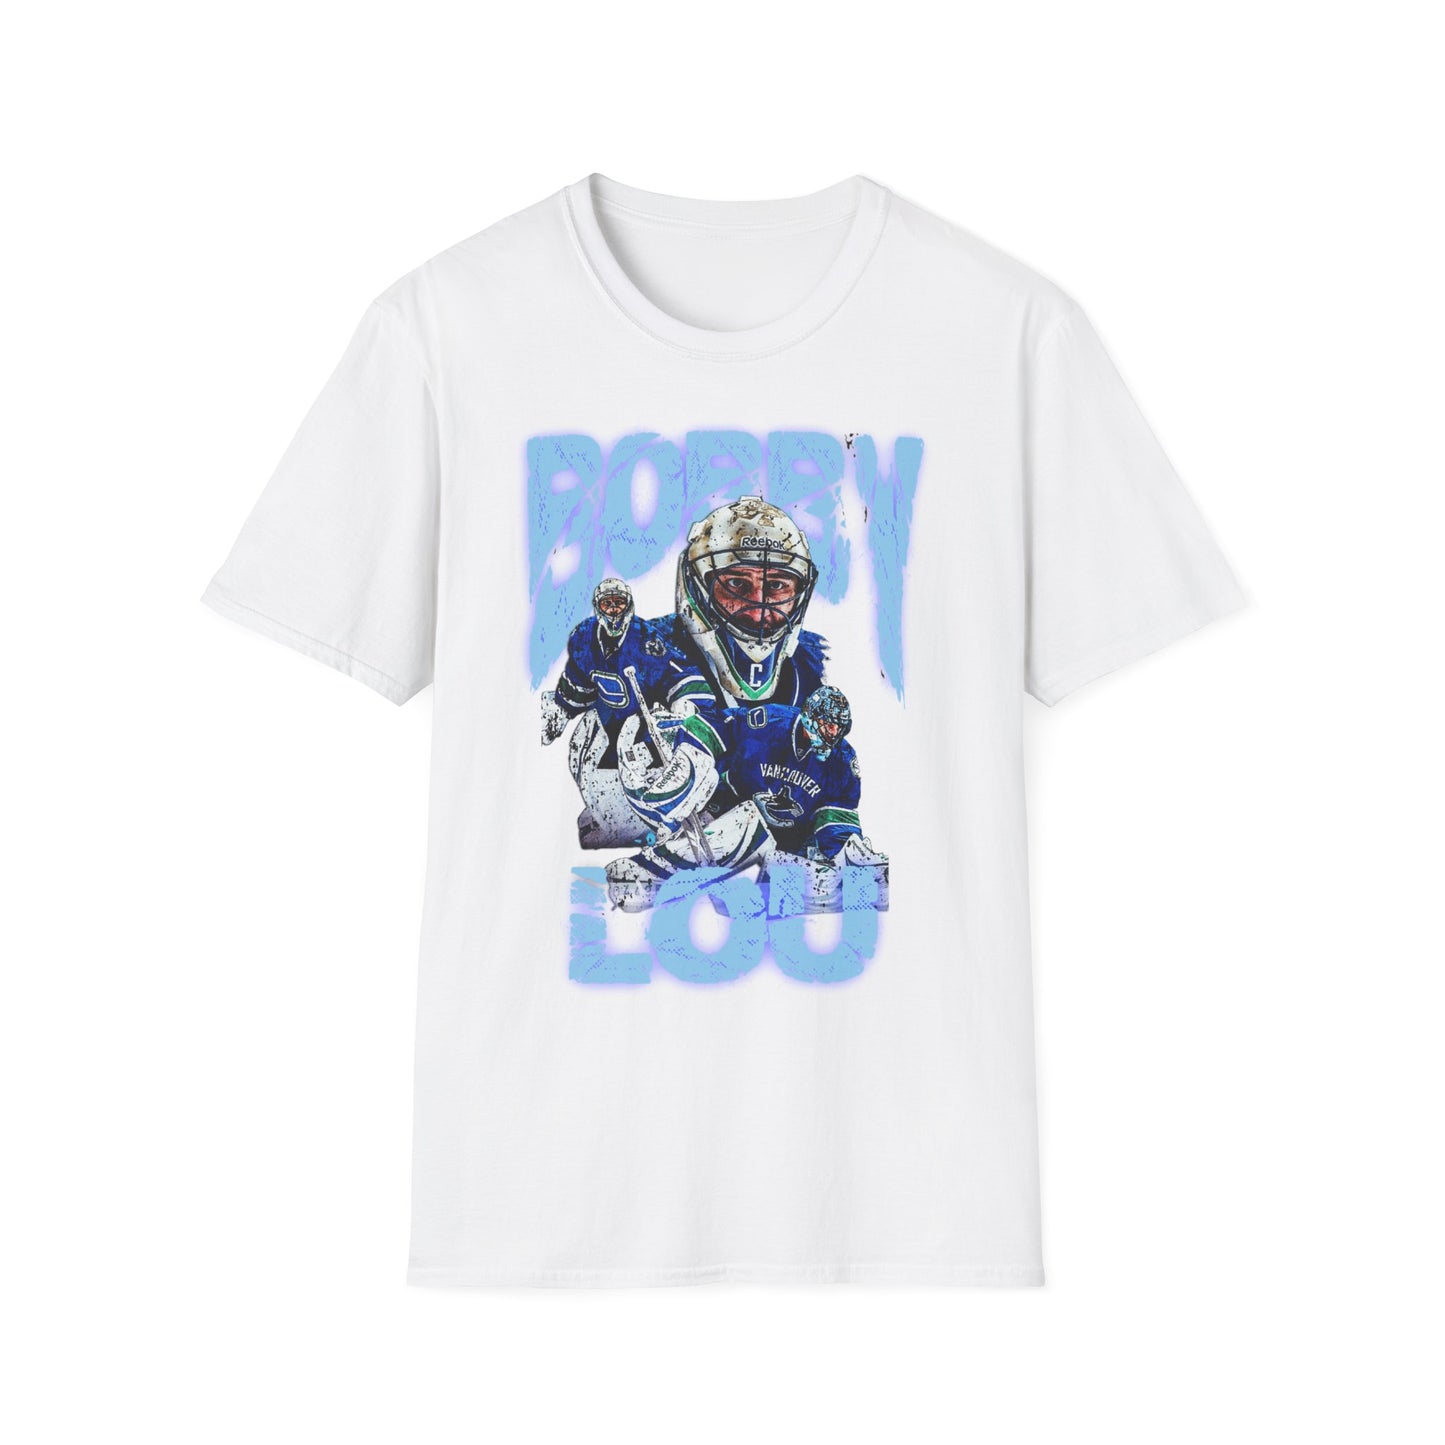 Bobby Lou Graphic T-Shirt